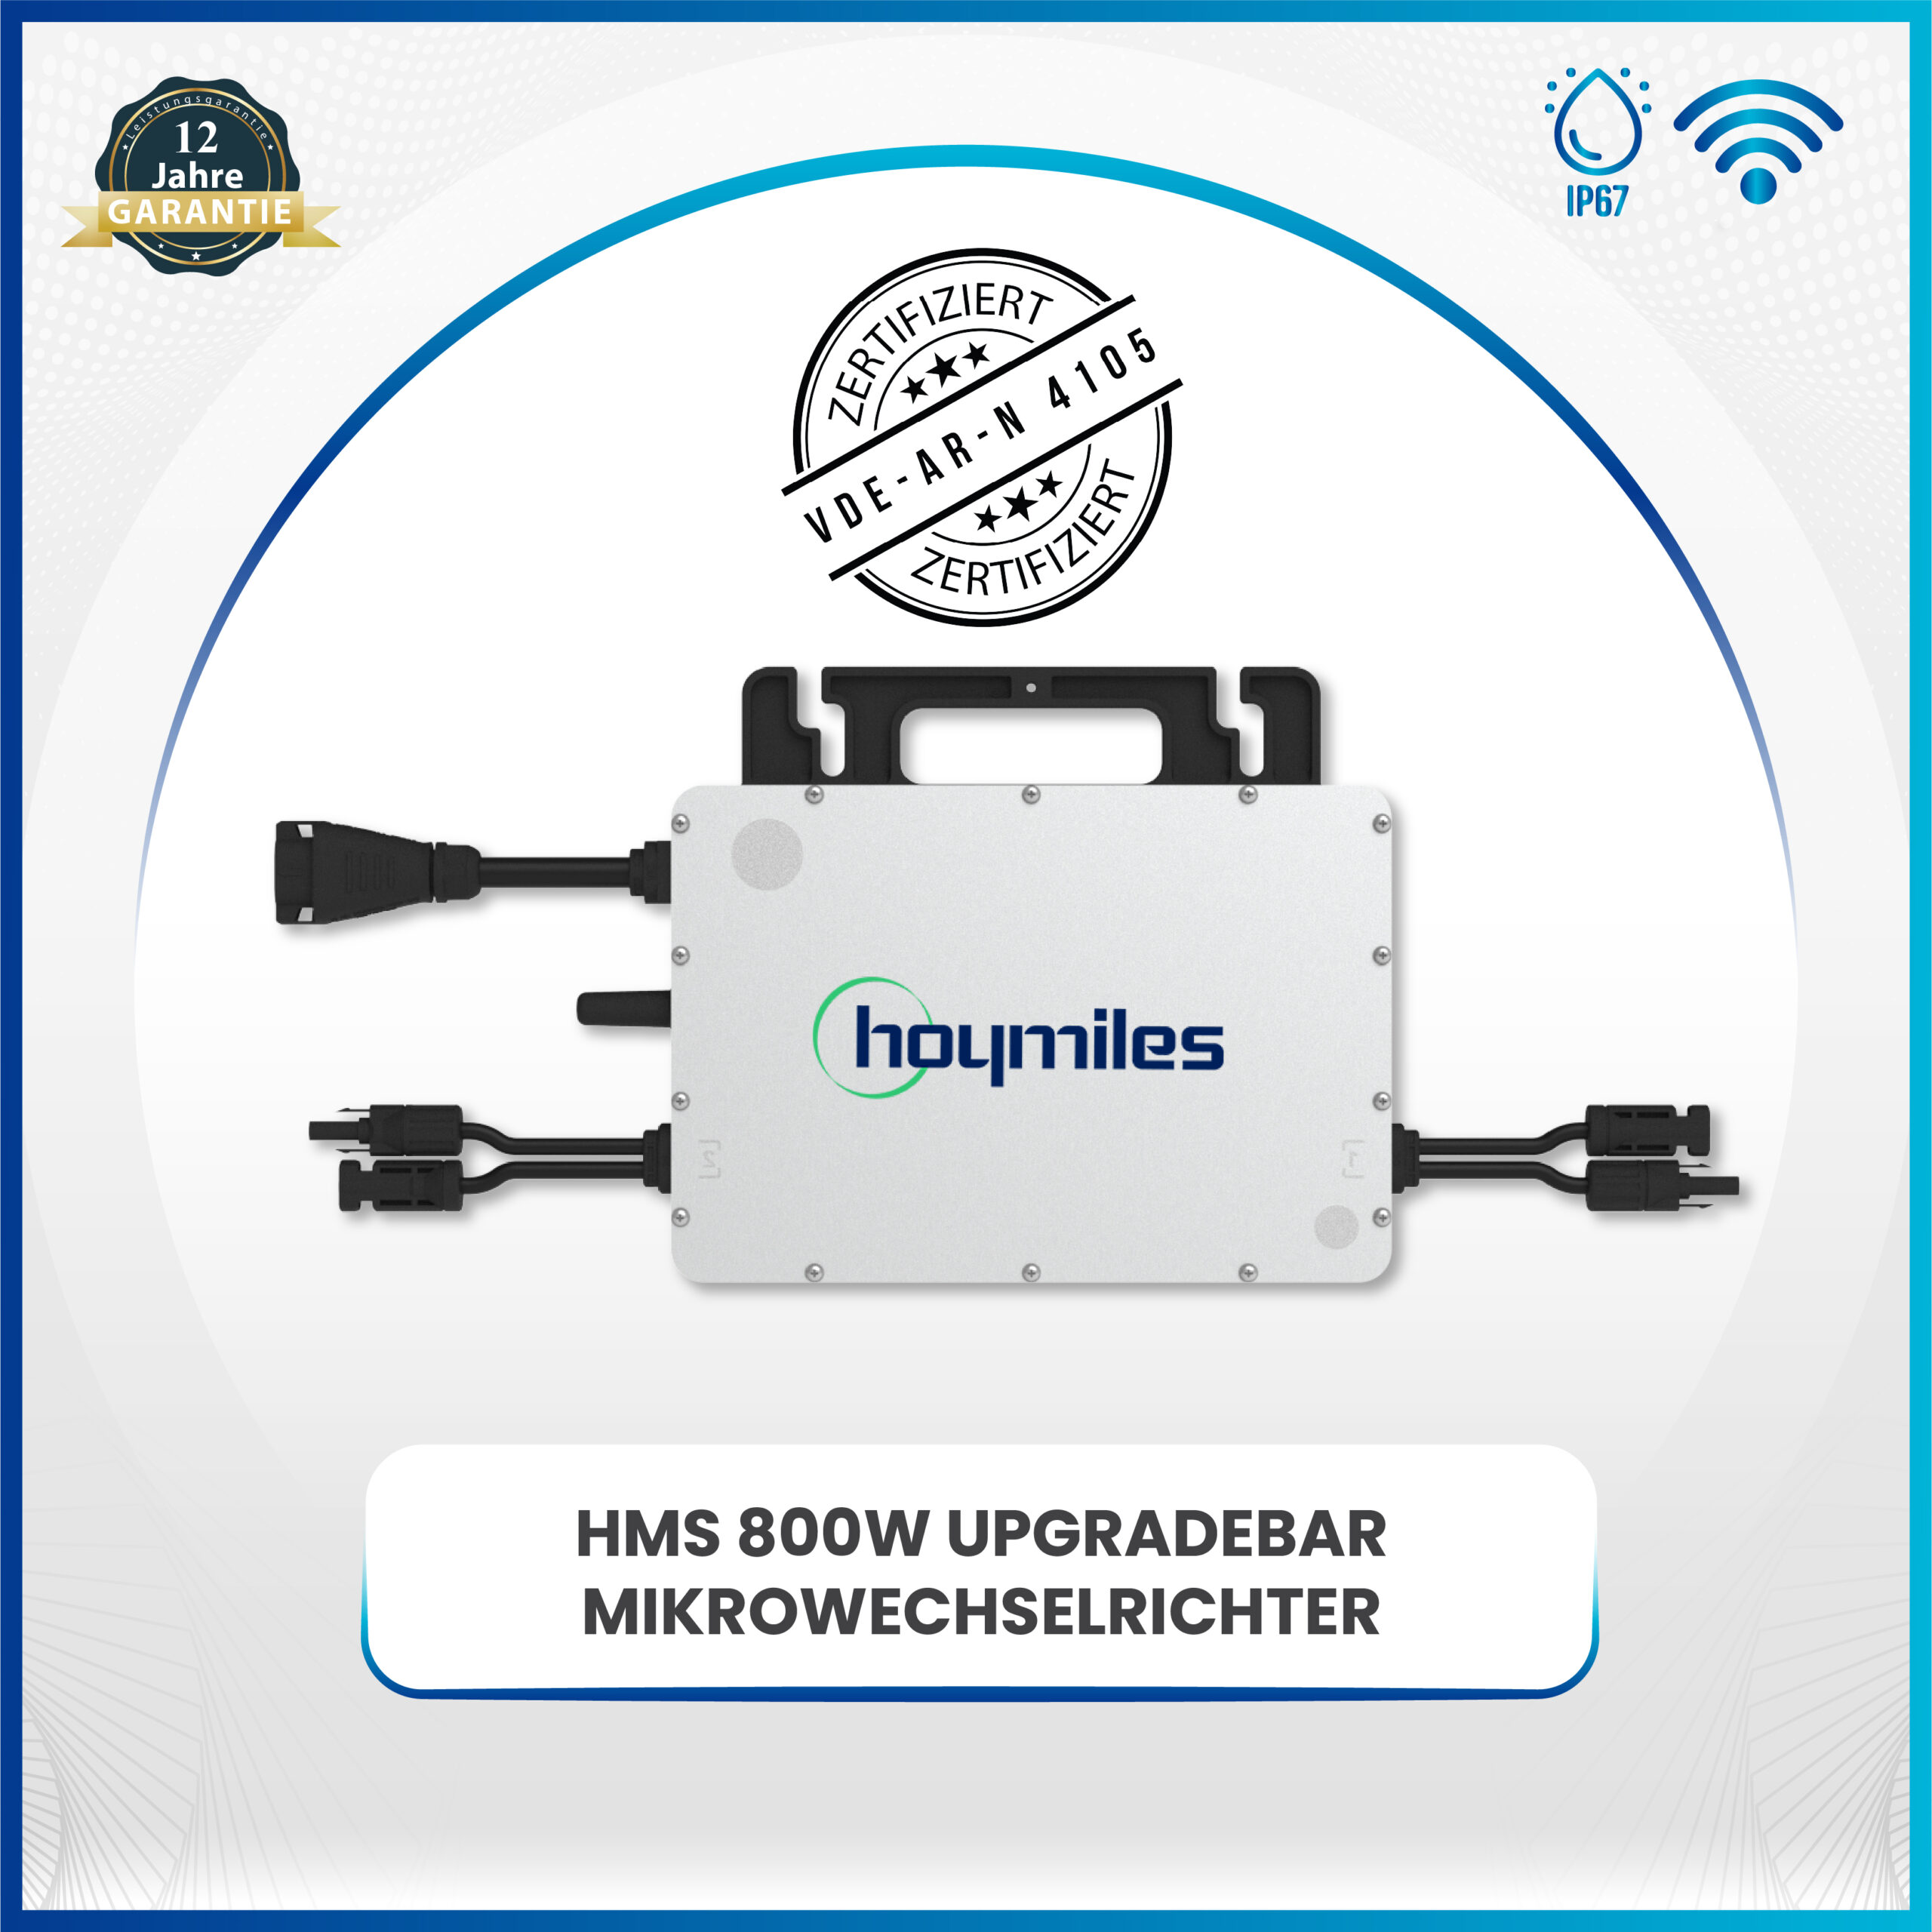 Hoymiles hms-800W Mikrowechselrichter